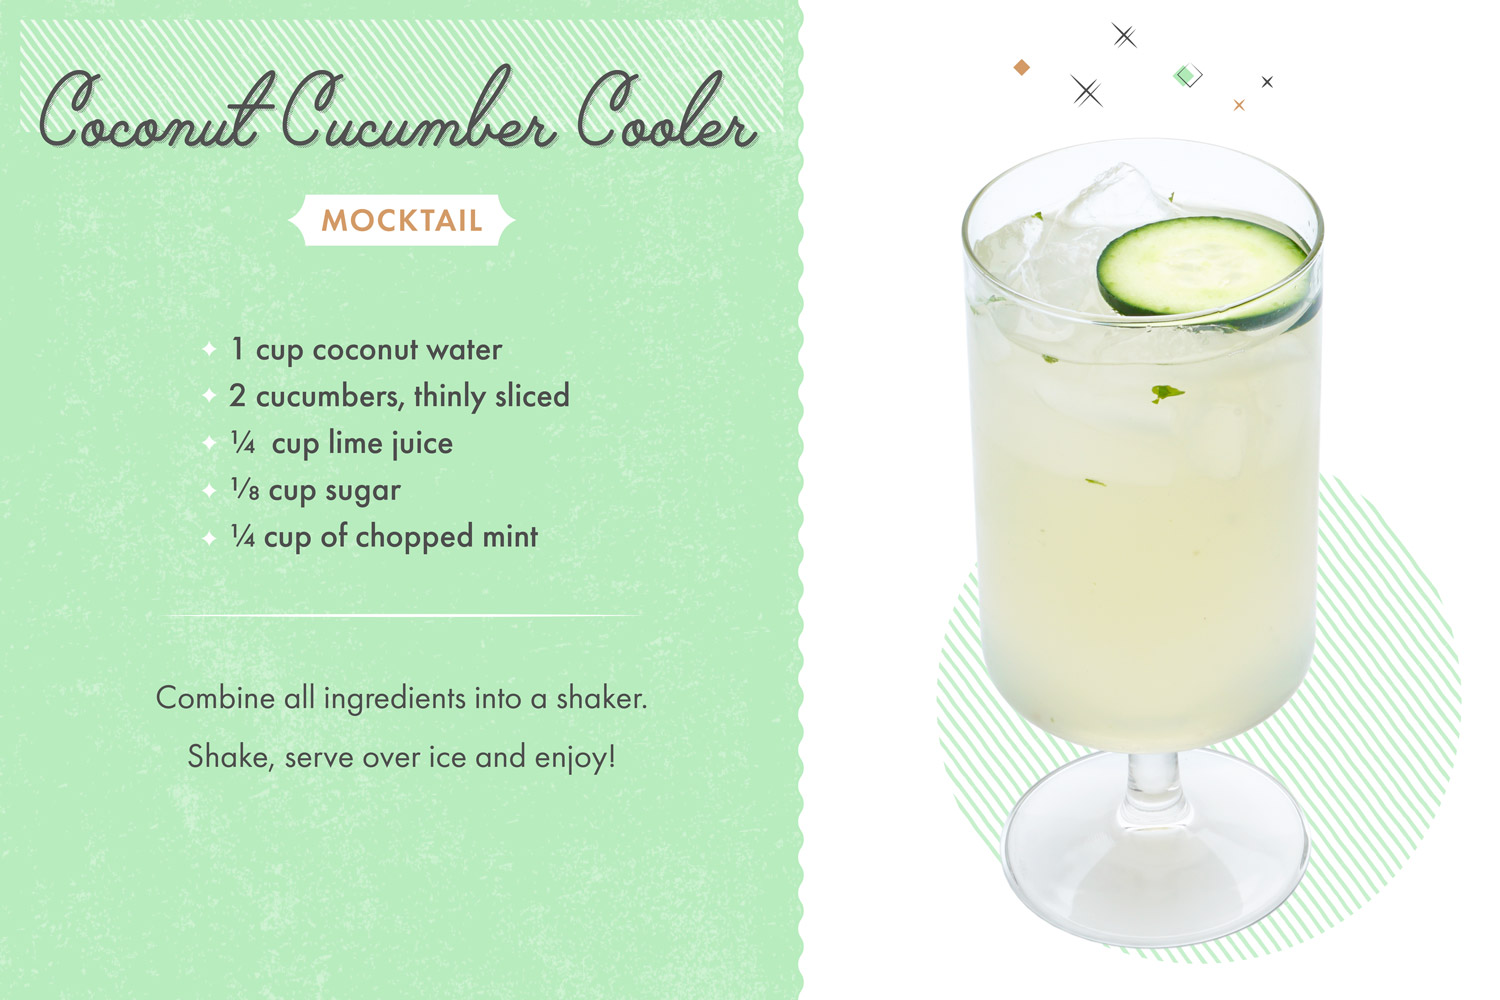 mocktail recipes coconut cucumber cooler